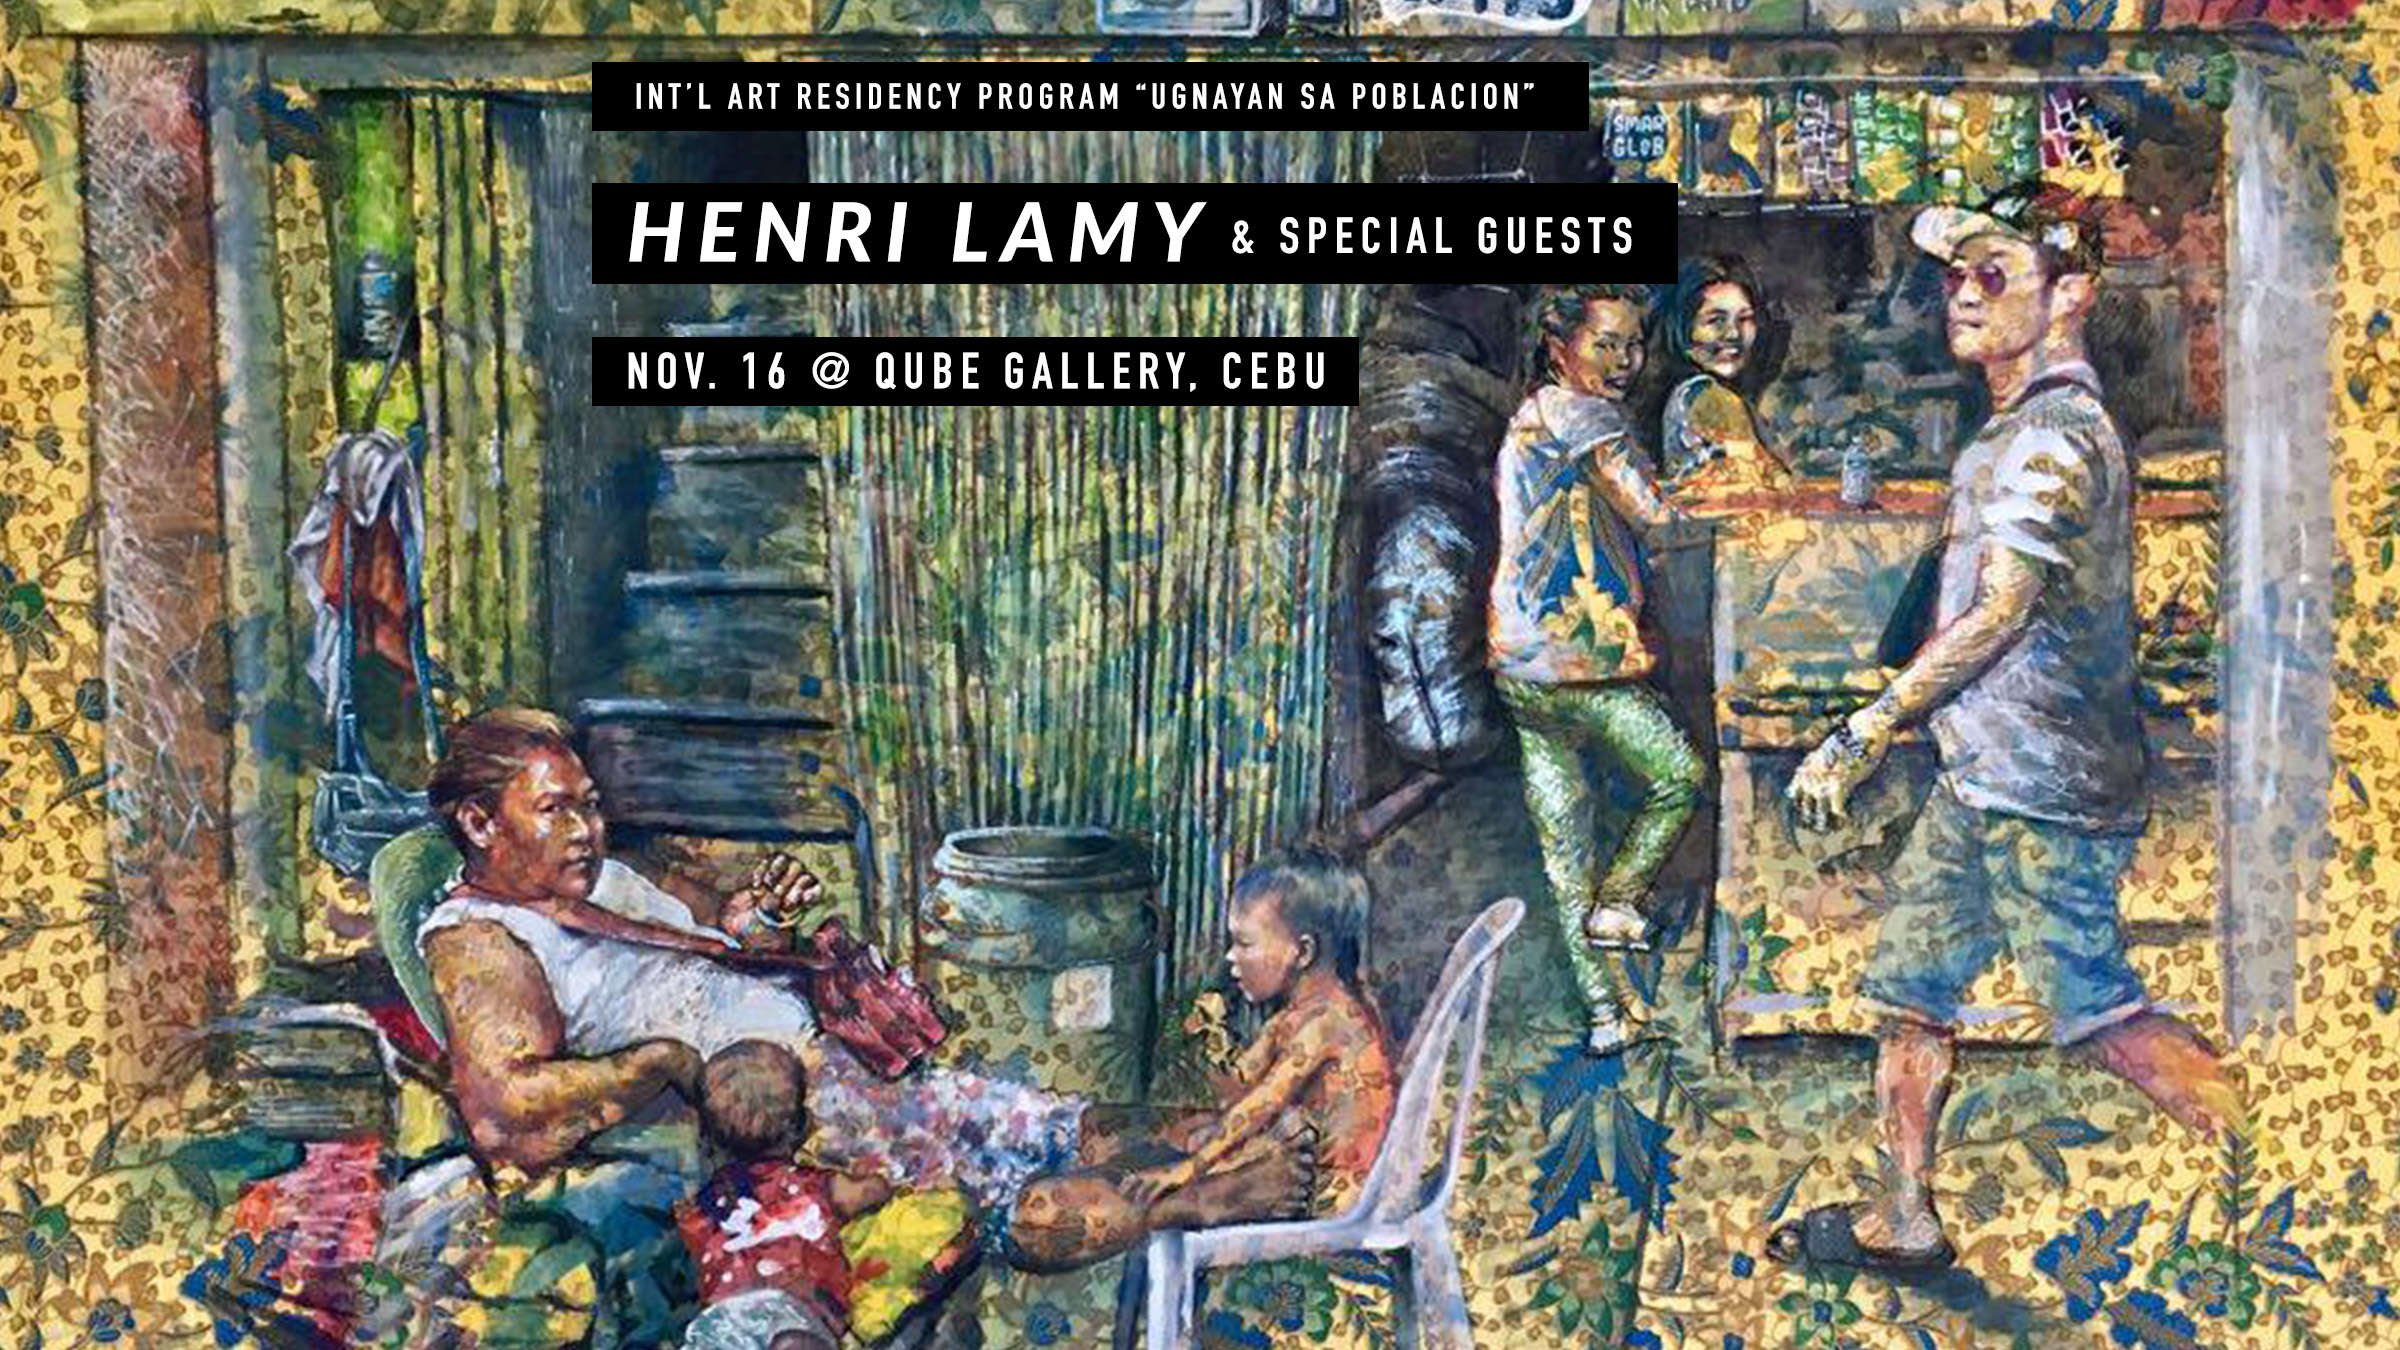 Henri Lamy solo show "POWER" @Qube Gallery, Cebu on Nov. 16th, 2017. By Taverne Gutenberg